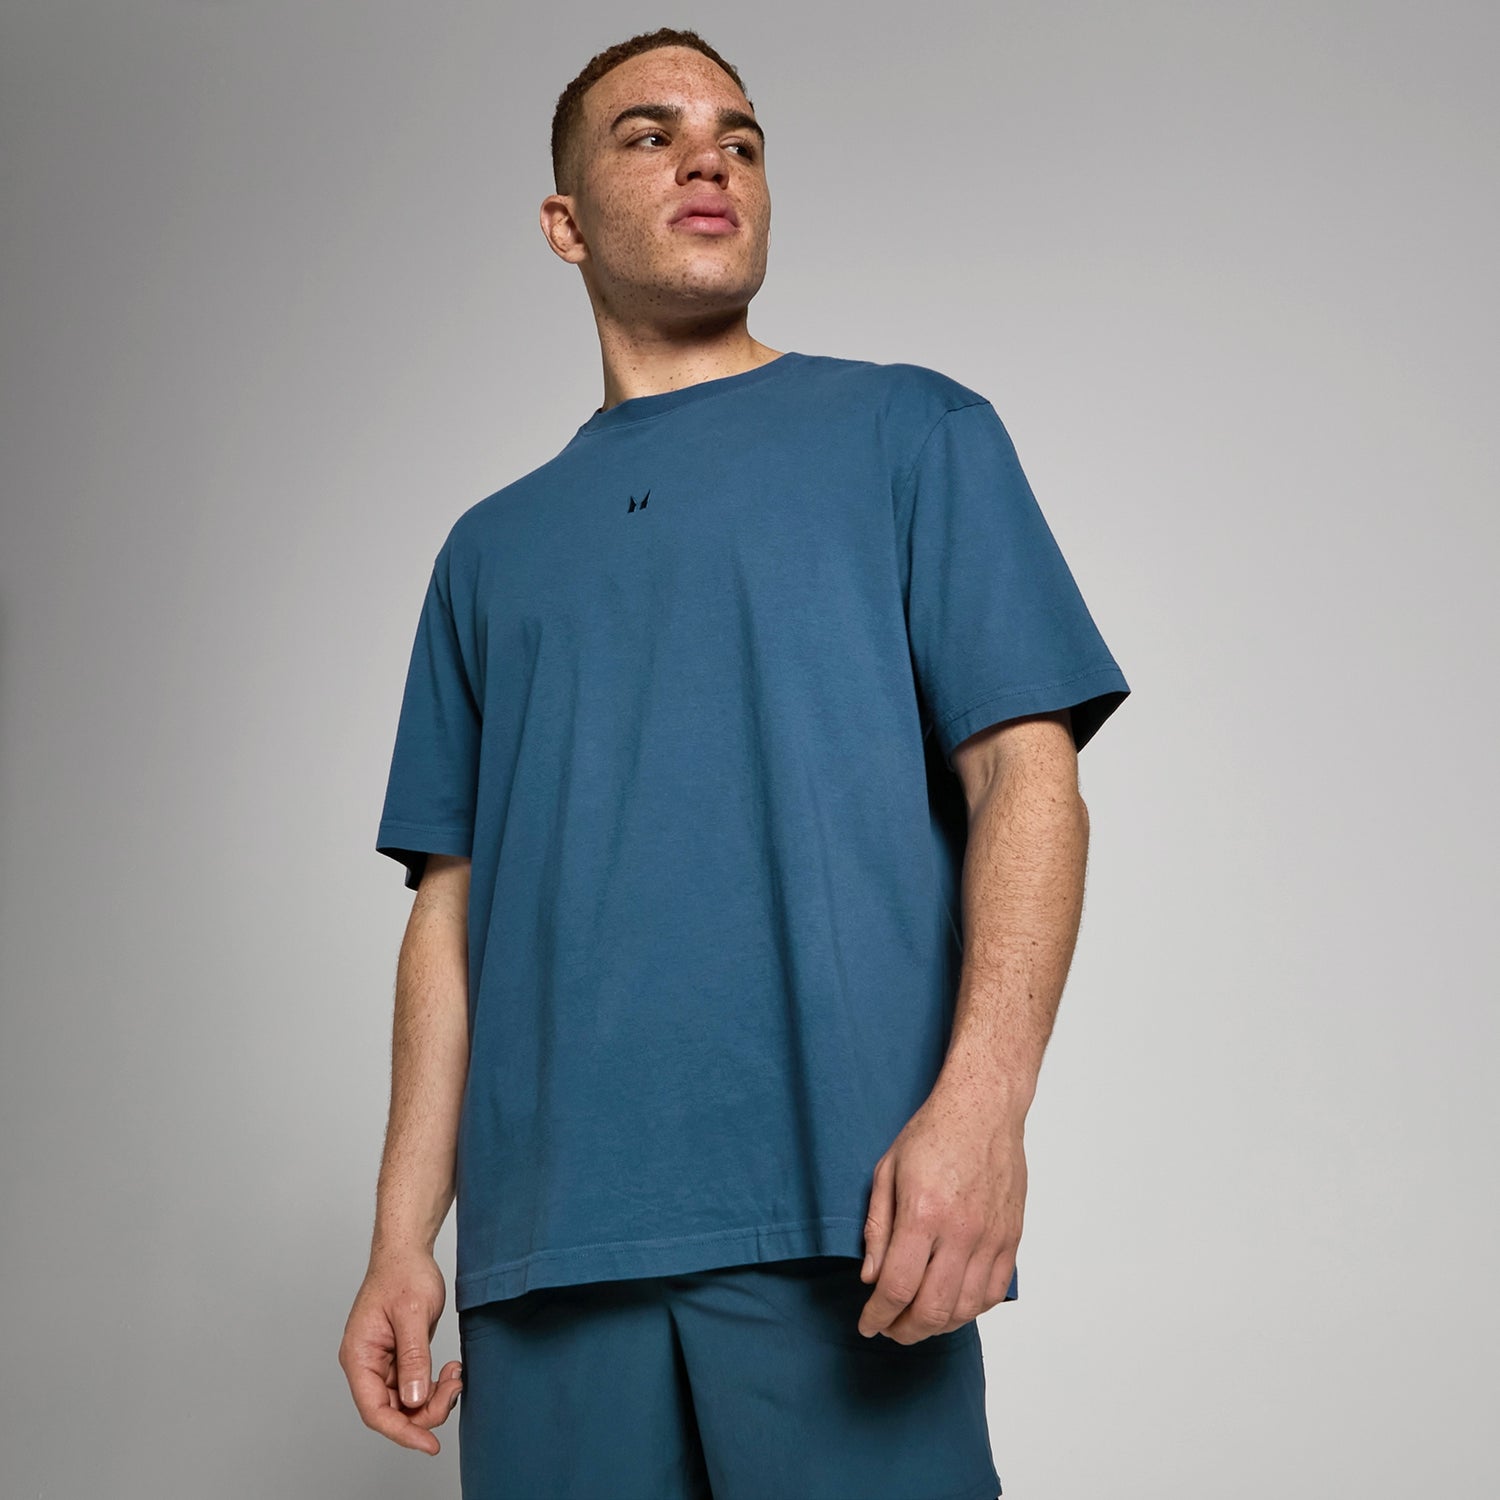 Мужская оверсайз футболка MP Tempo — состаренный темно-синий цвет